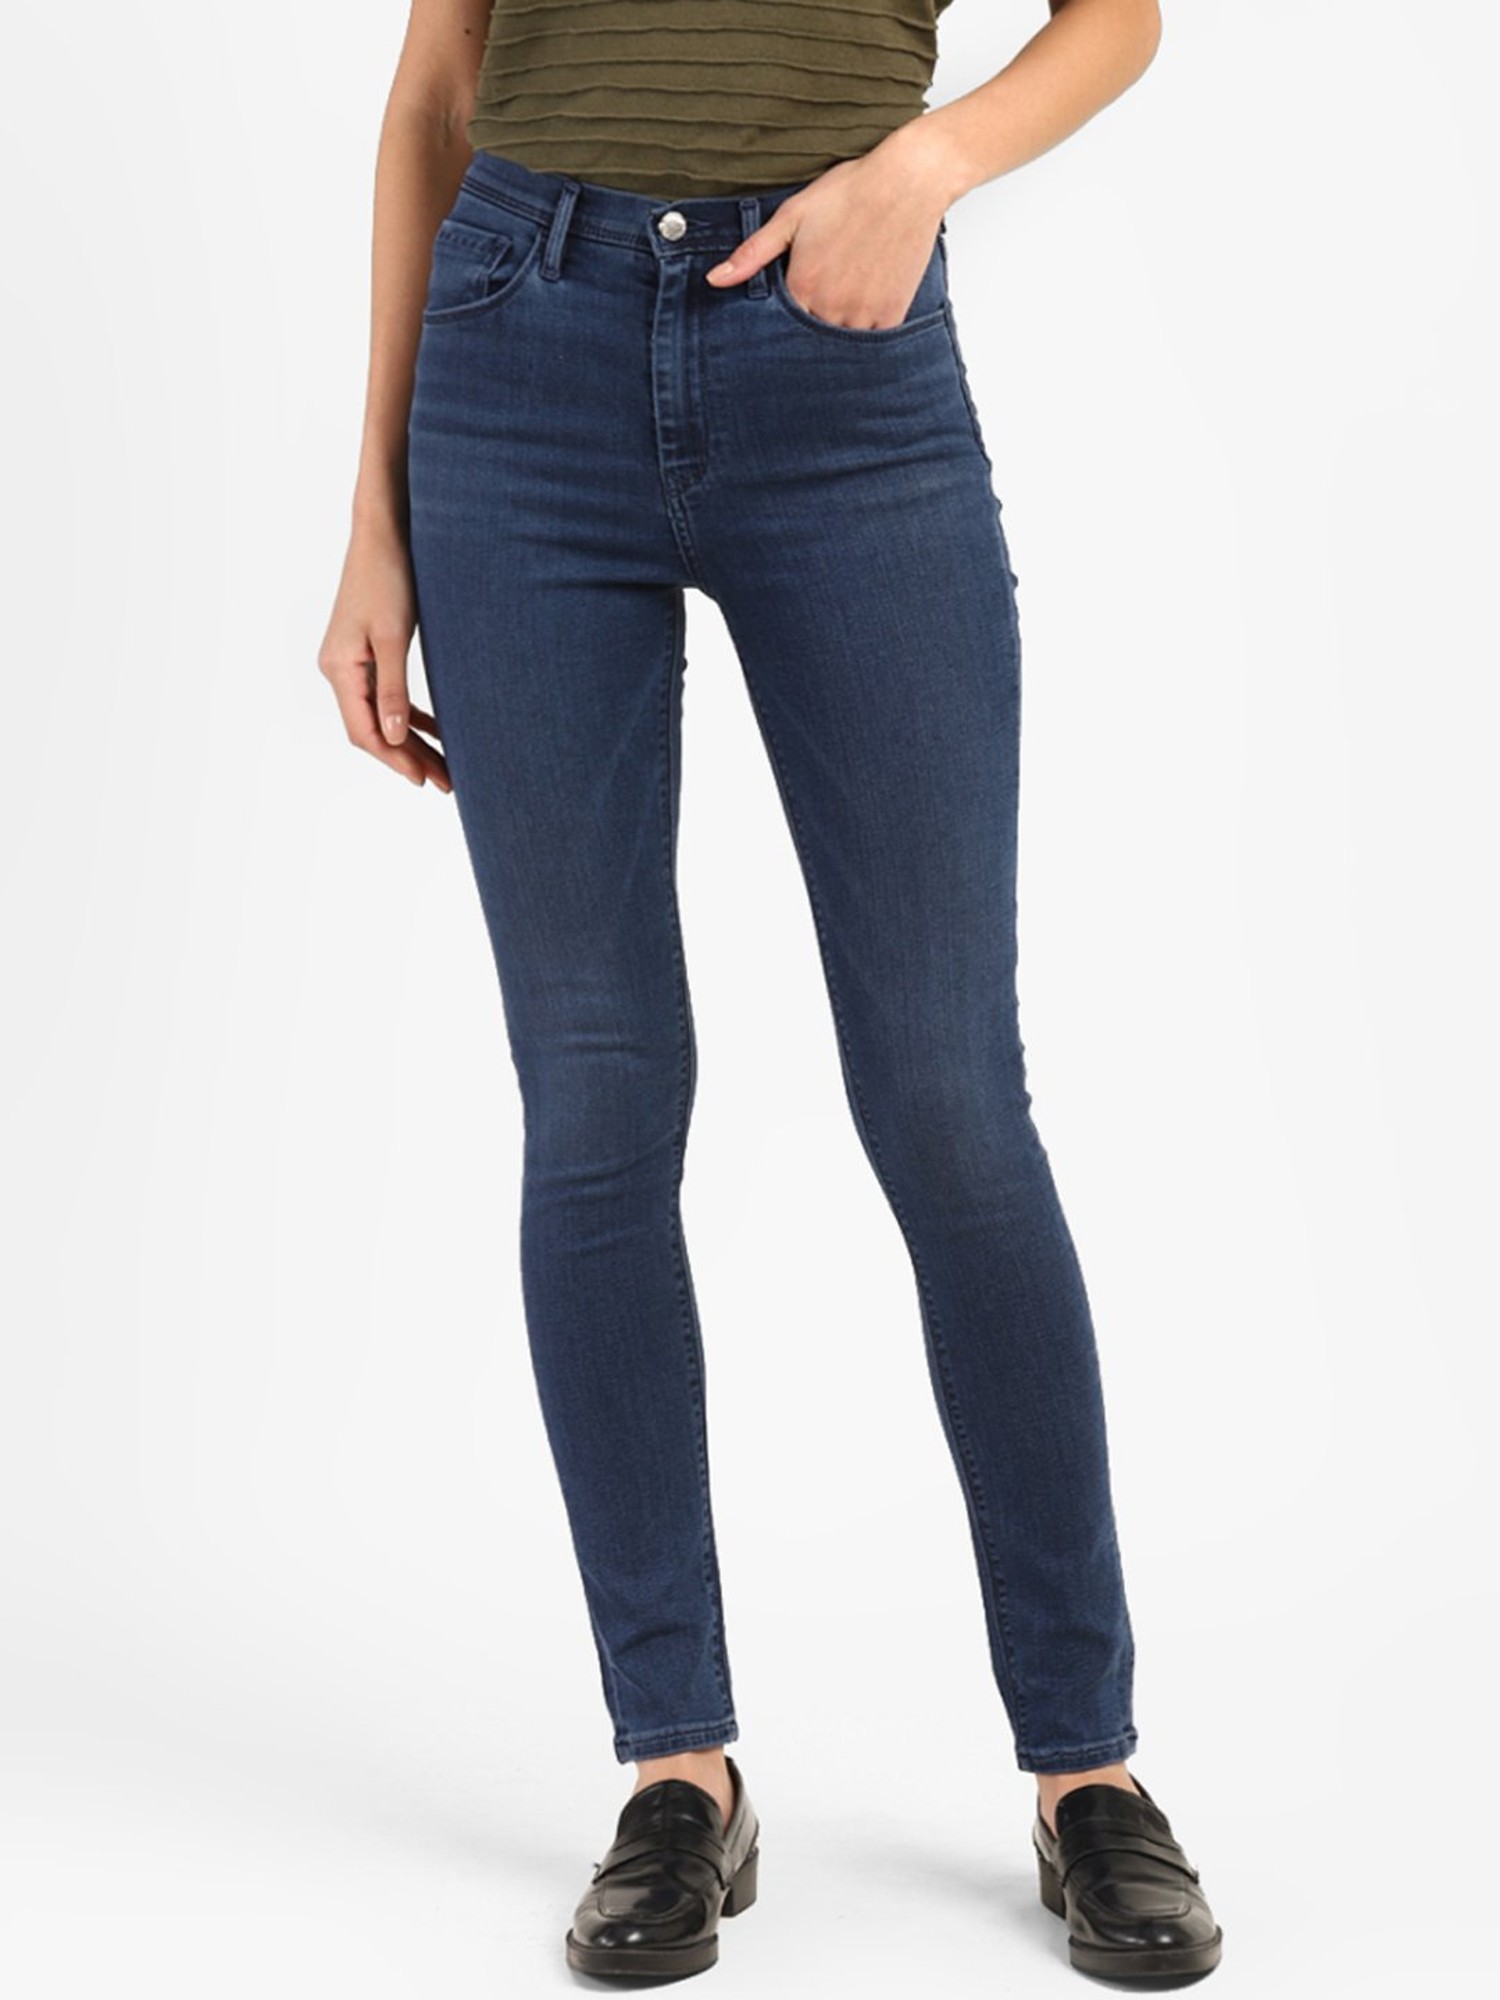 Buy Levi's waterless Denim Blue Cotton Jeans for Women Online @ Tata CLiQ